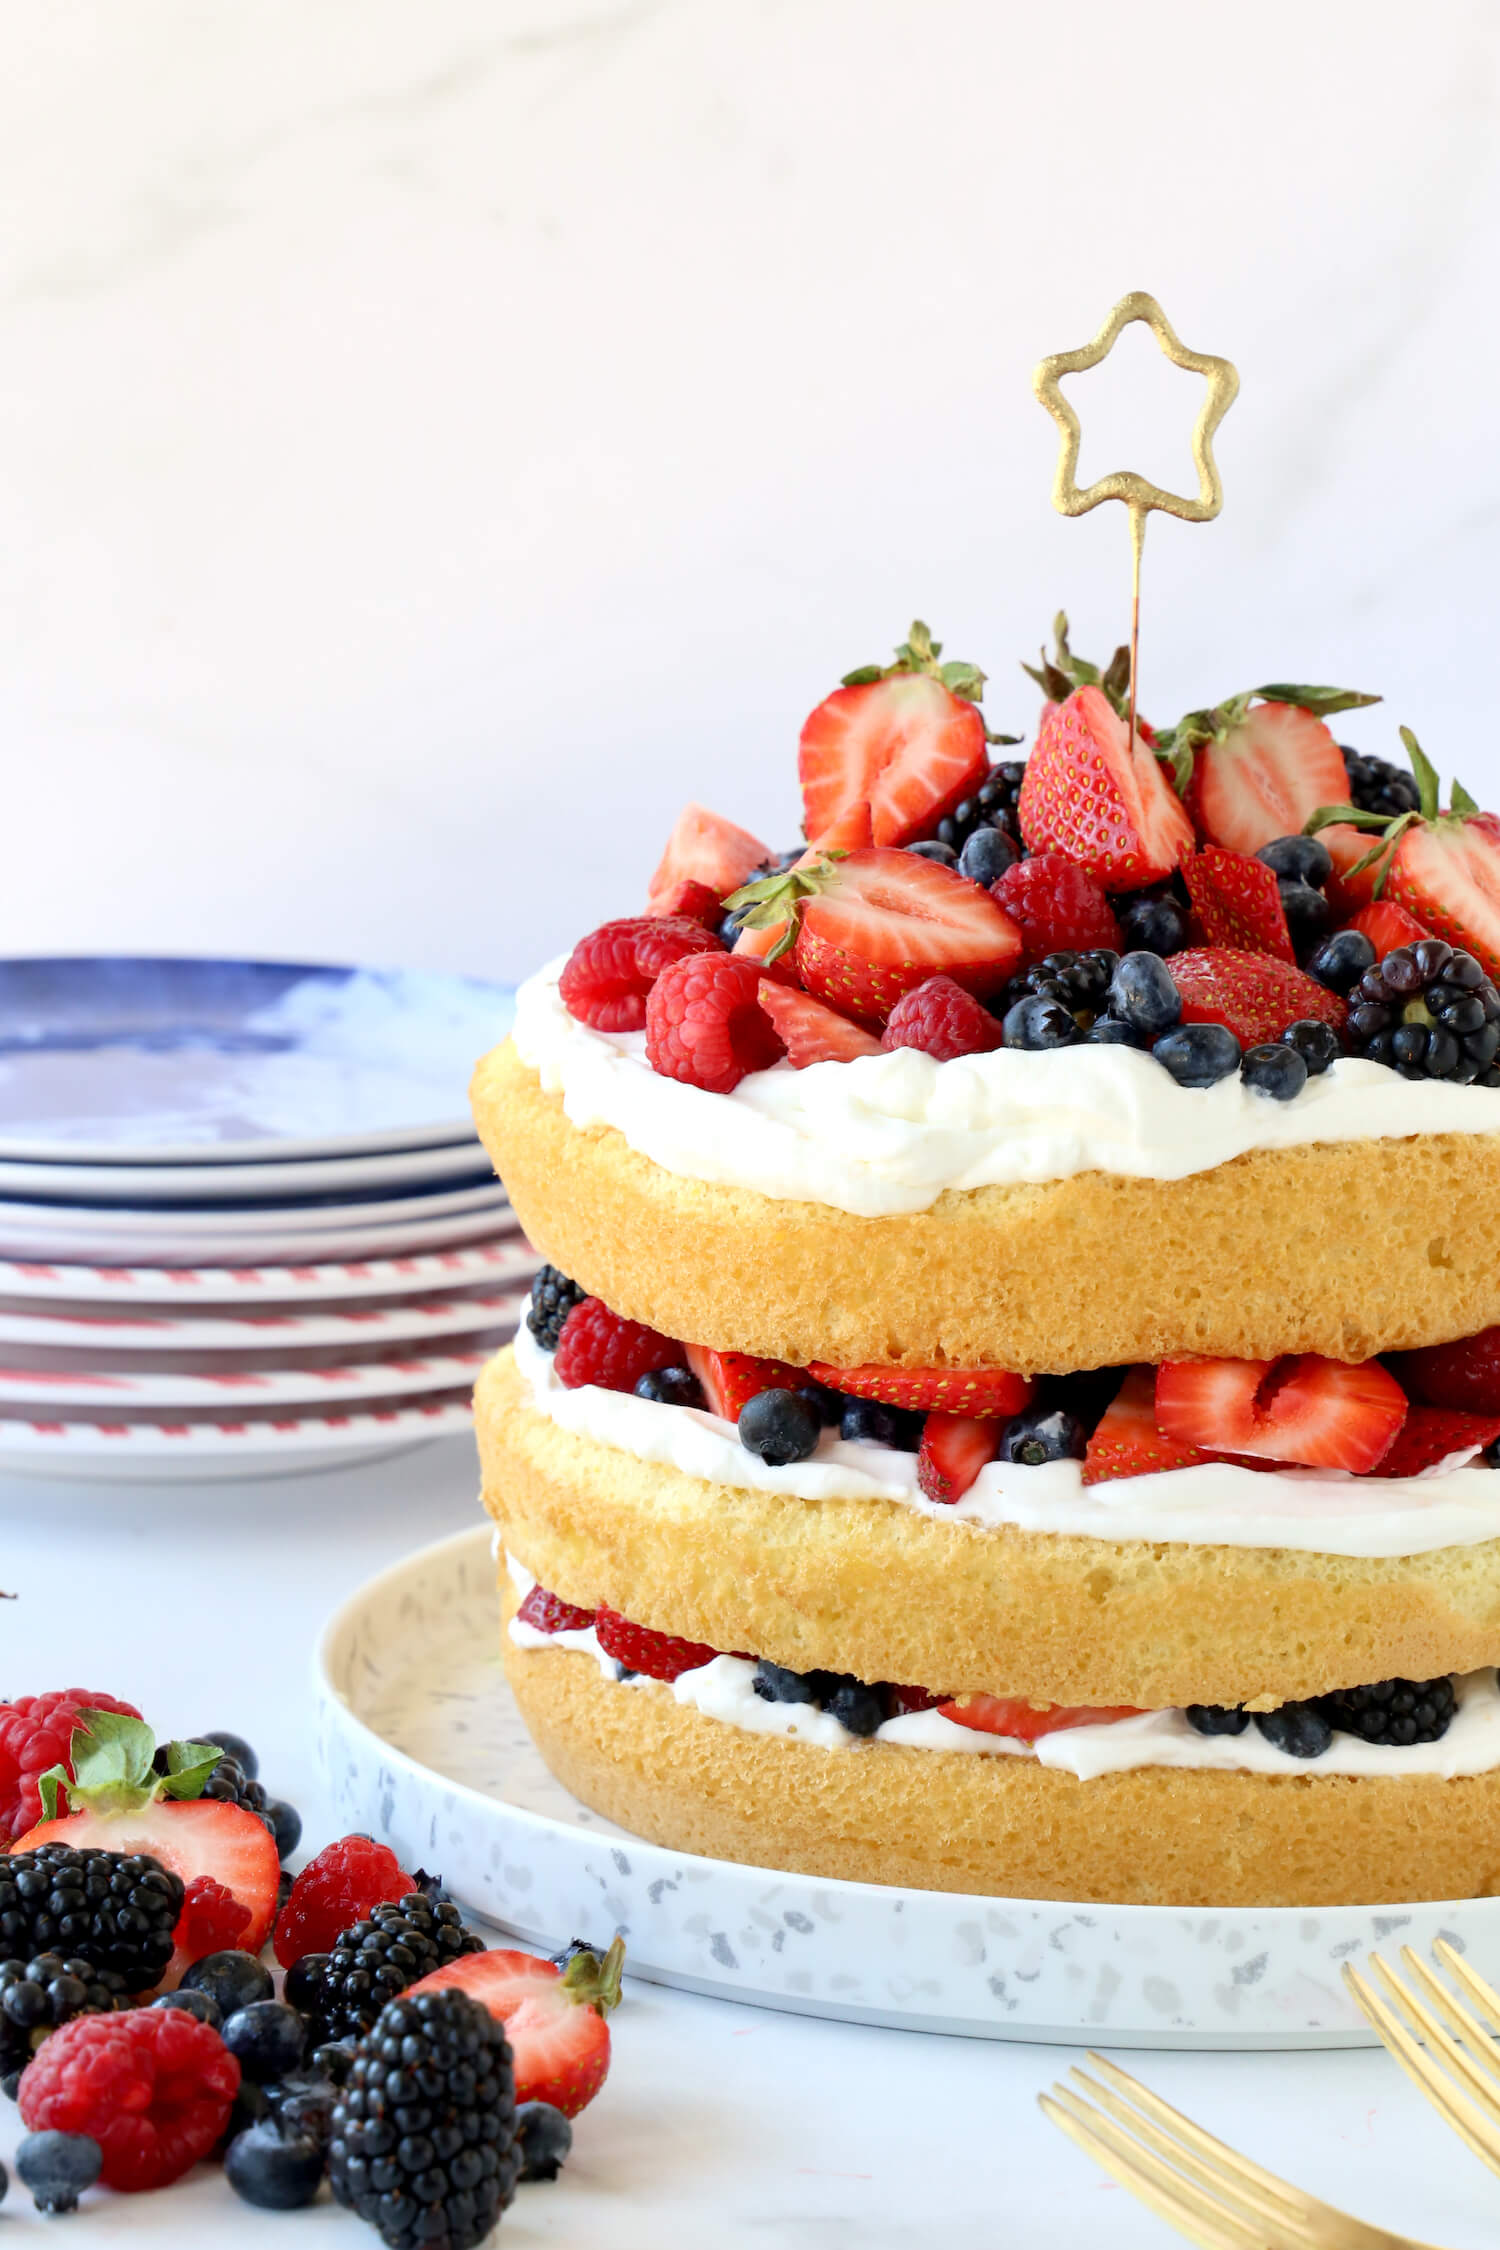 Three layers of sponge cake layered with fresh berries and whipped cream